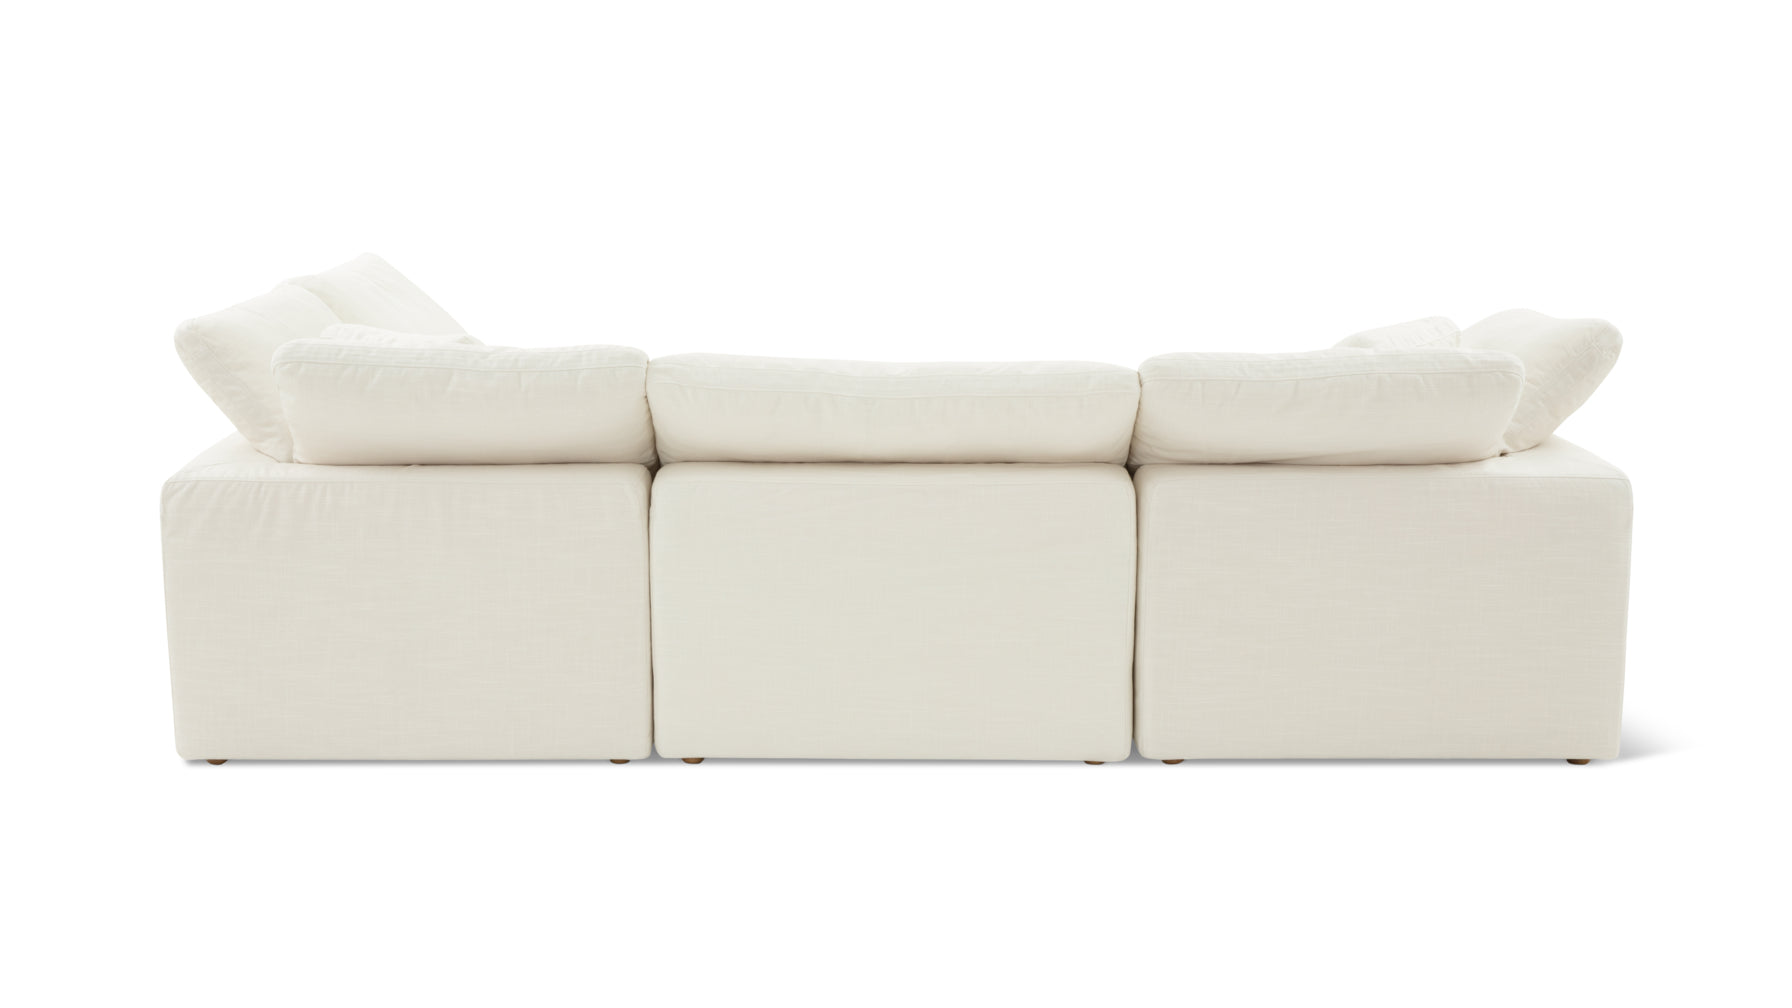 Movie Night™ 3-Piece Modular Sofa, Large, Cream Linen - Image 8